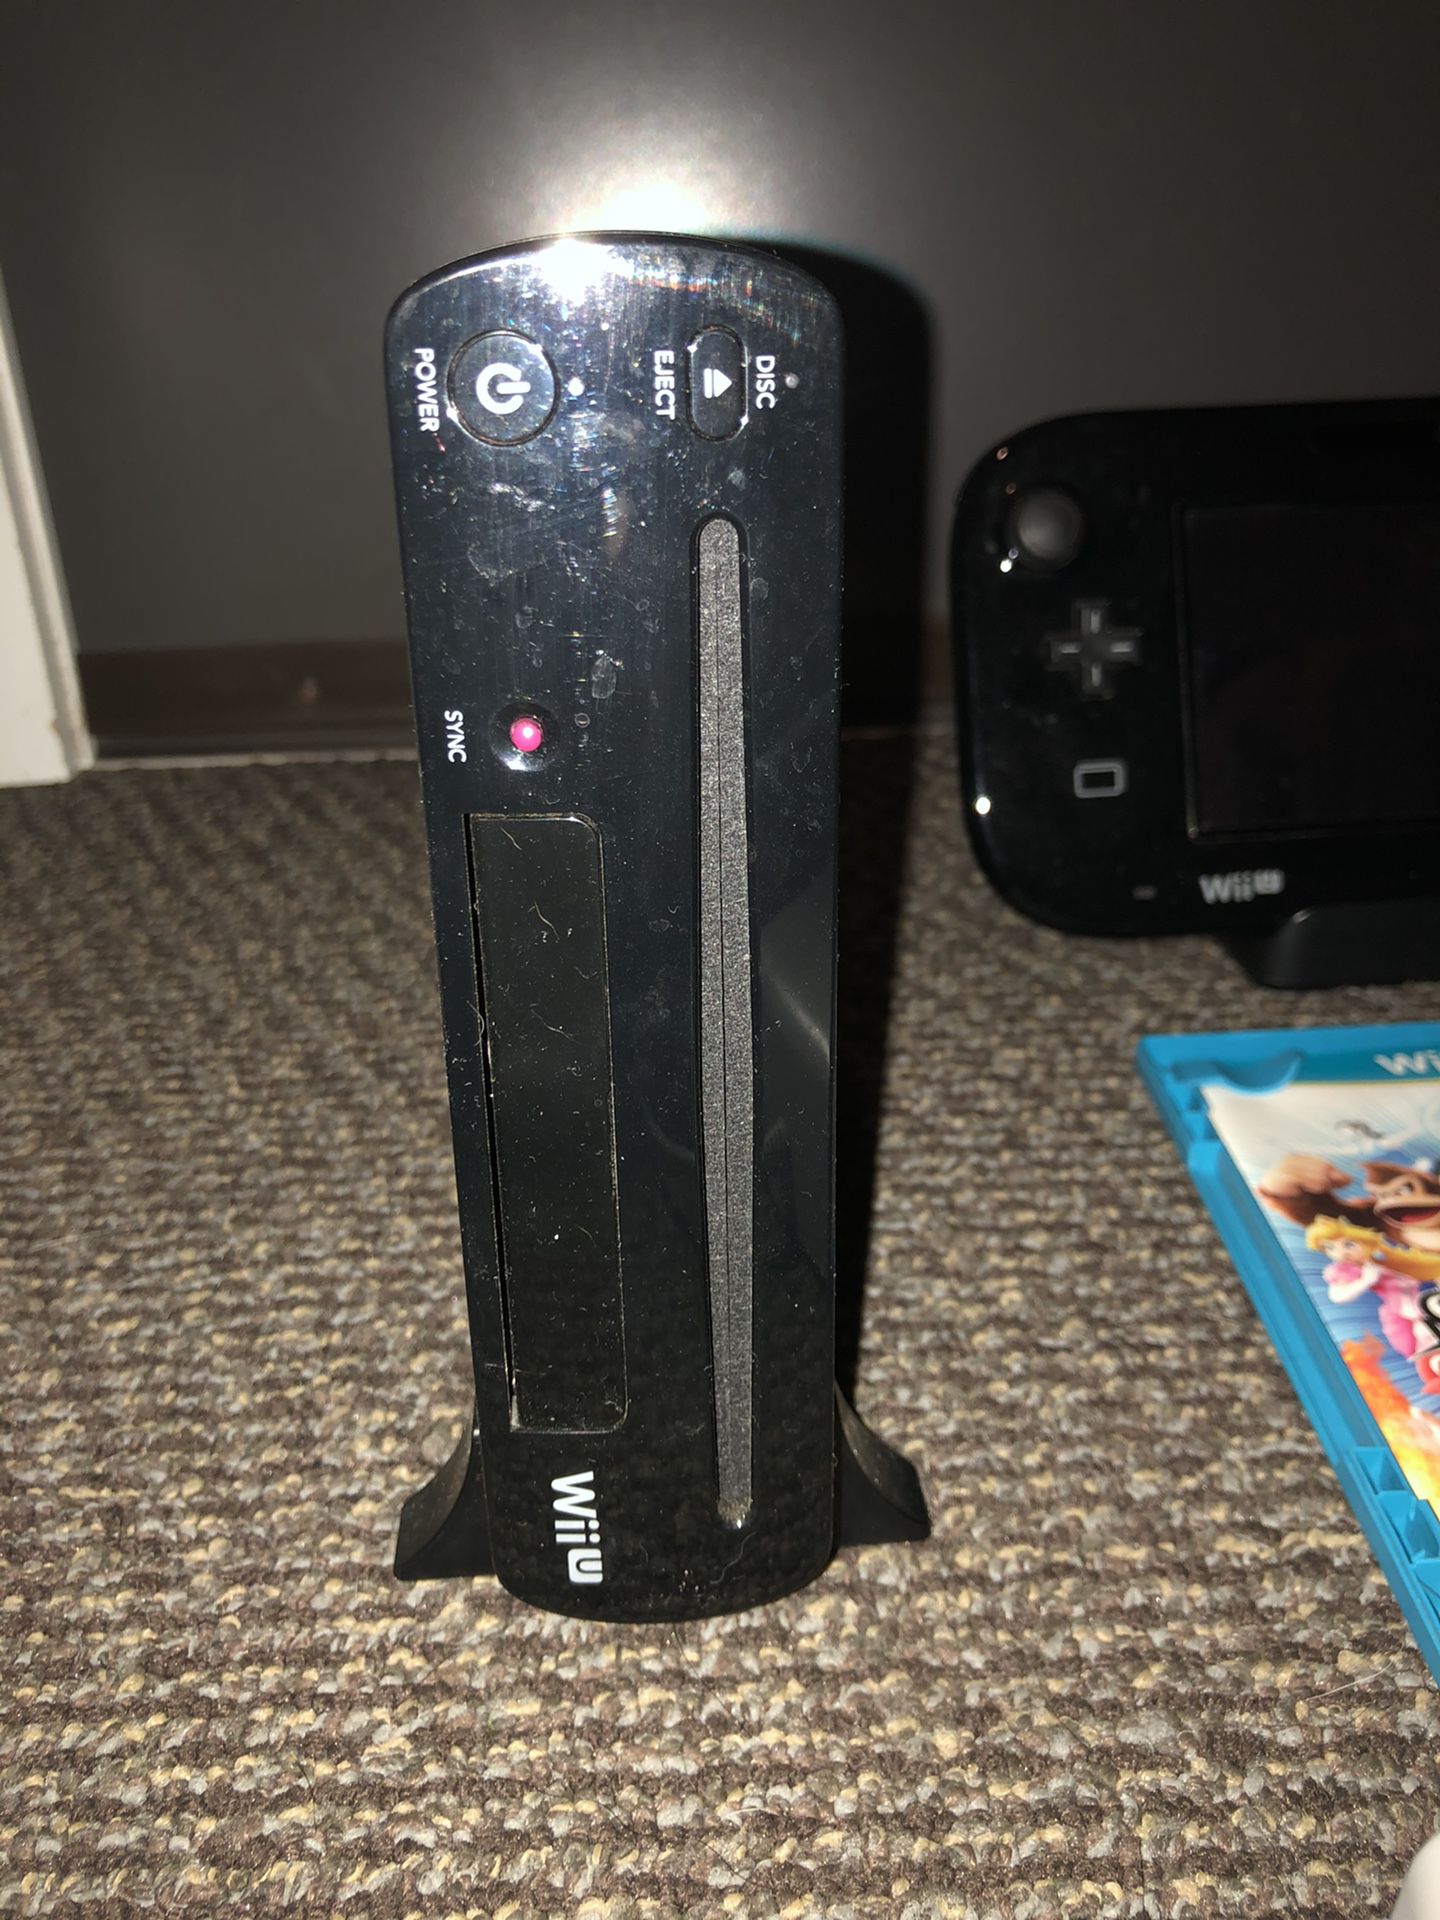 32 GB Nintendo Wii U + controllers/2 games